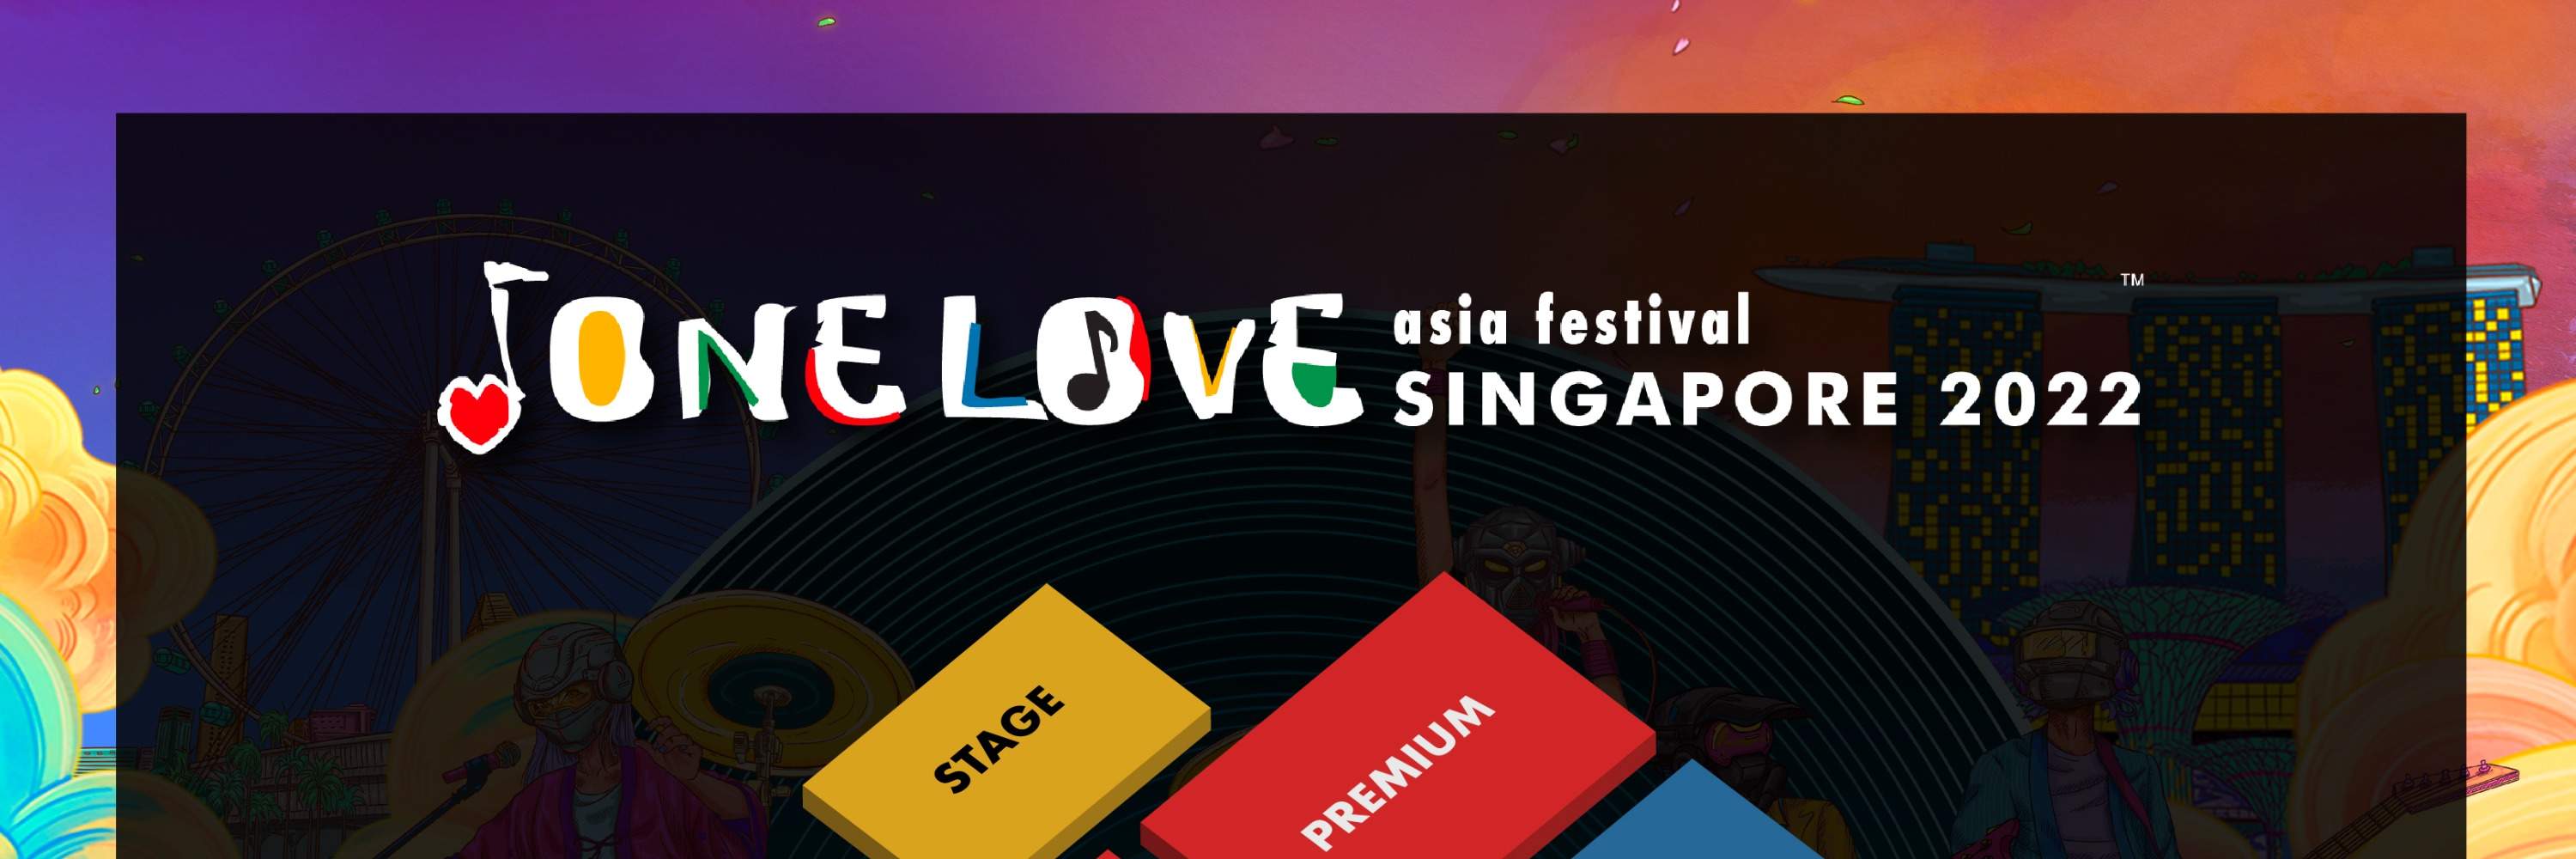 One Love Asia Festival Singapore 2022 Klook United Kingdom